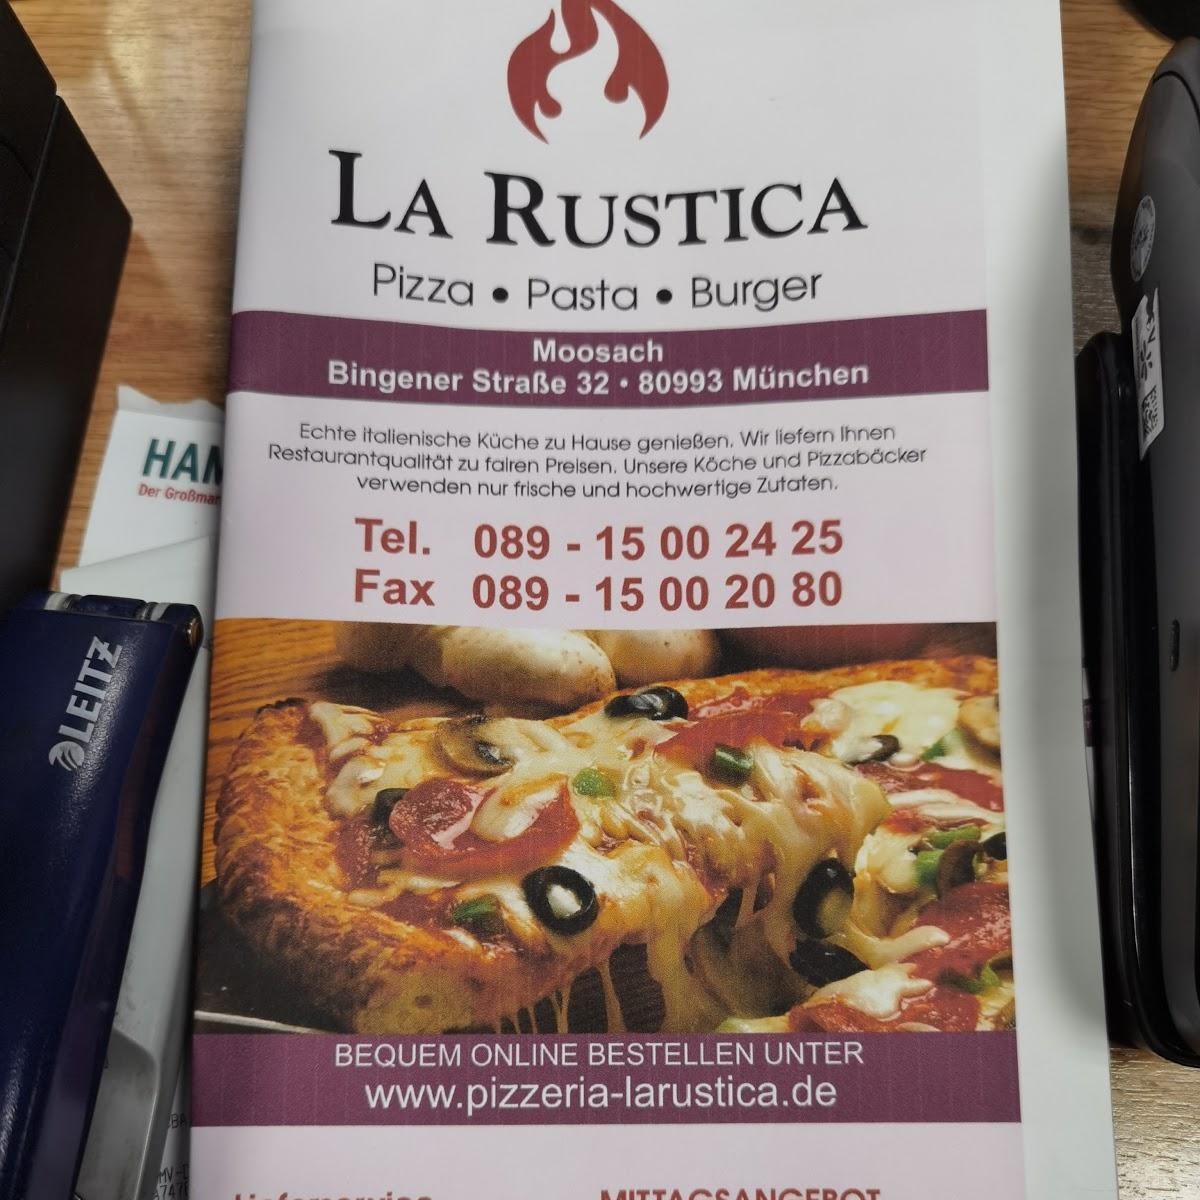 Restaurant "La Rustica" in München